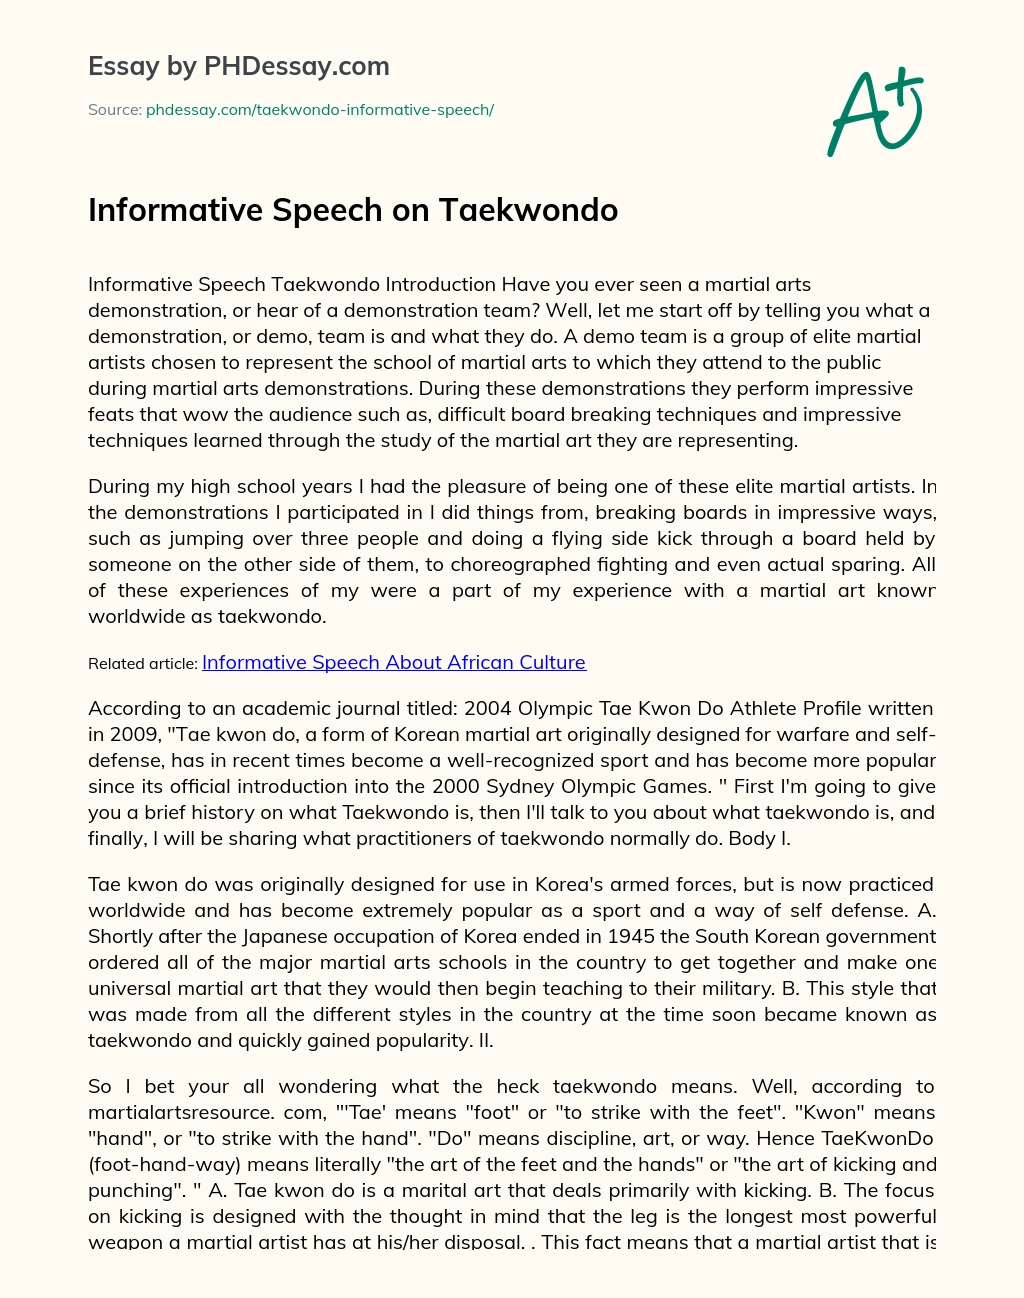 Informative Speech on Taekwondo essay